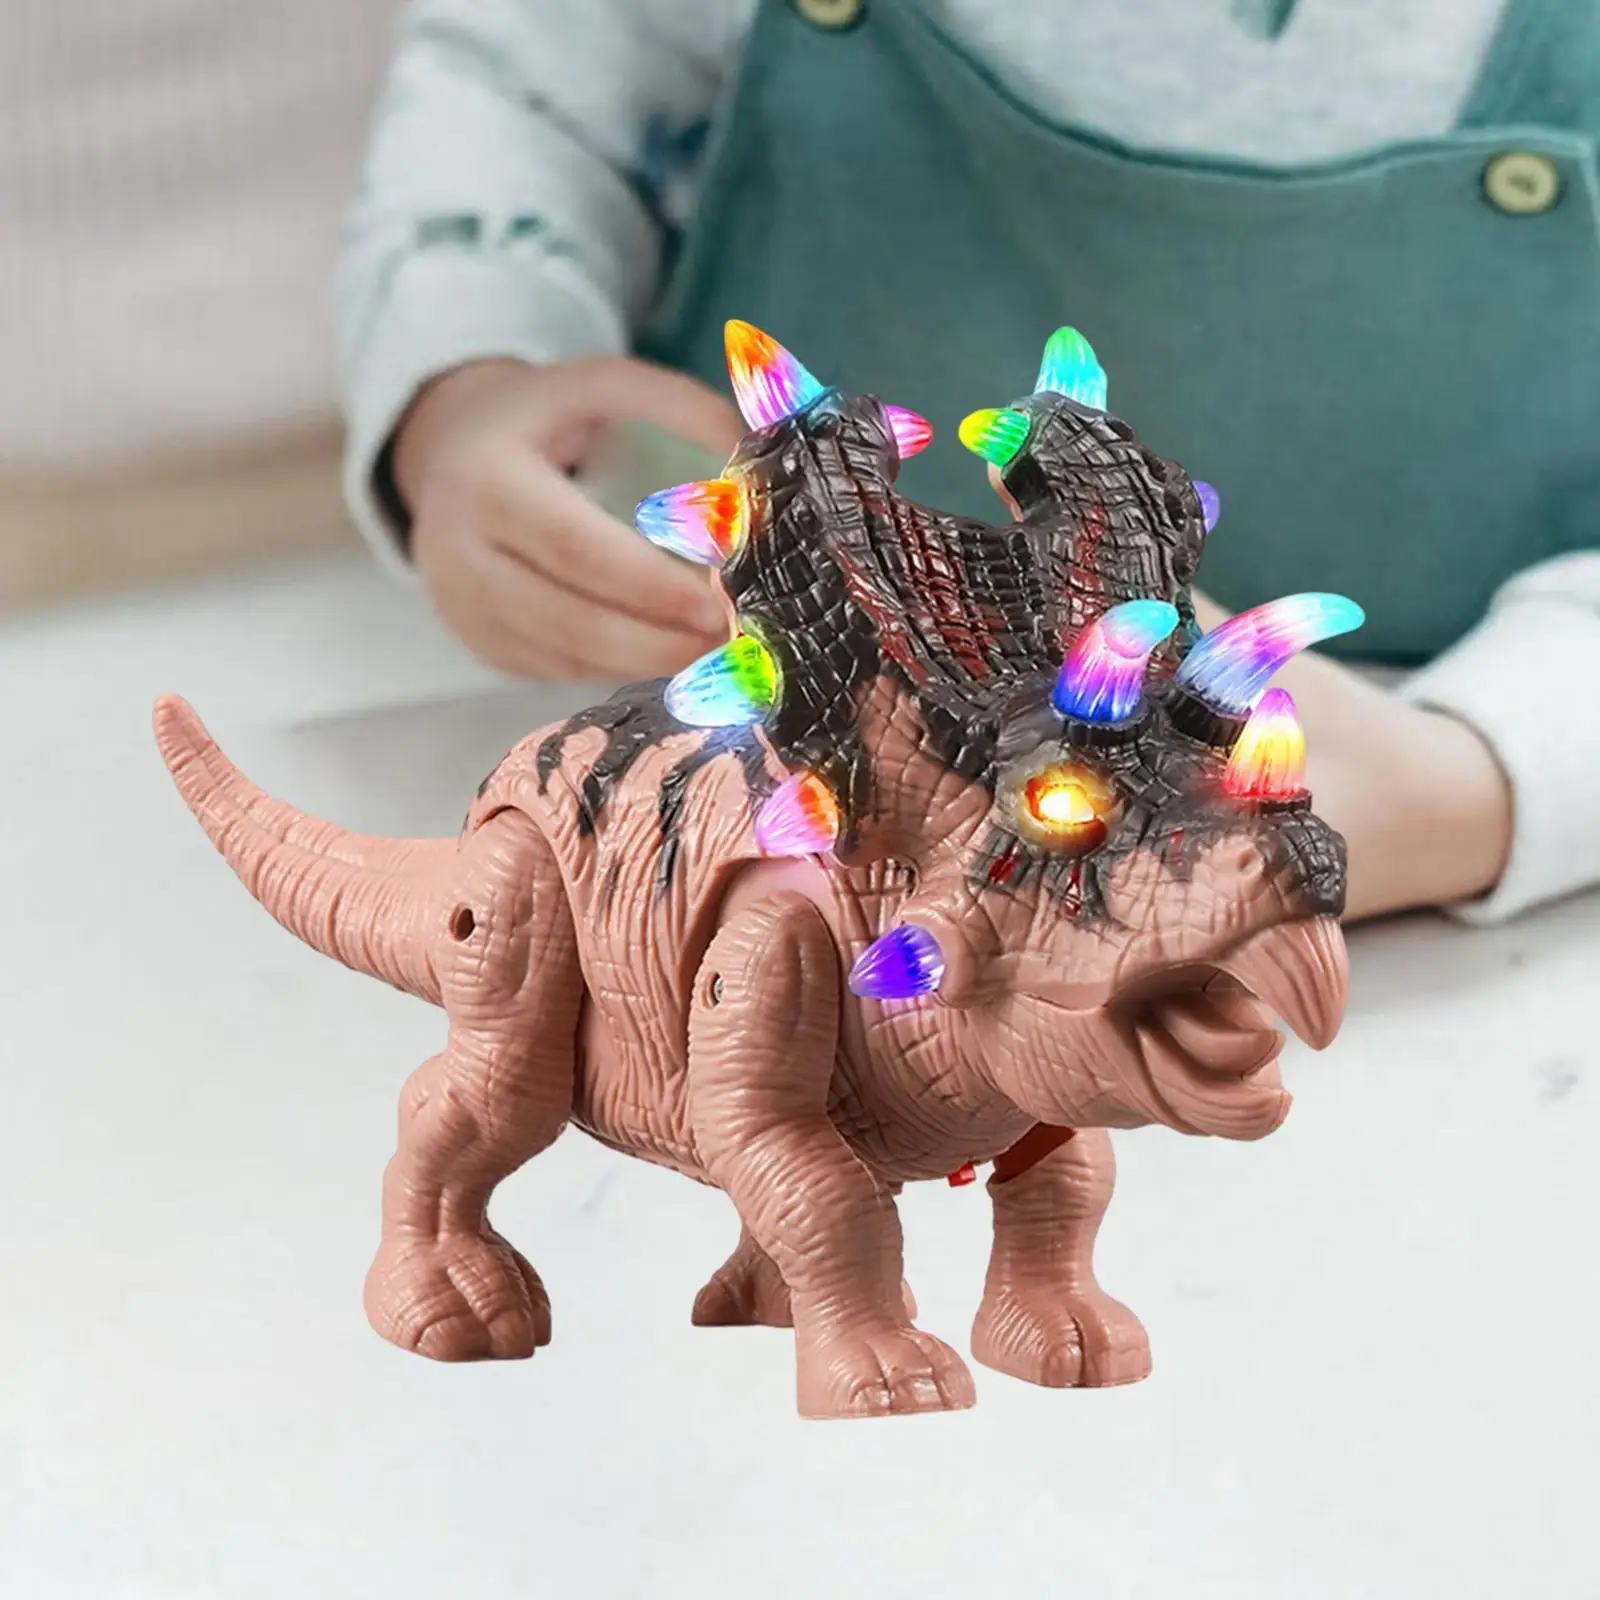 Simulation Electric Walking Robot Dinosaur Figure for Boys Birthday Gifts